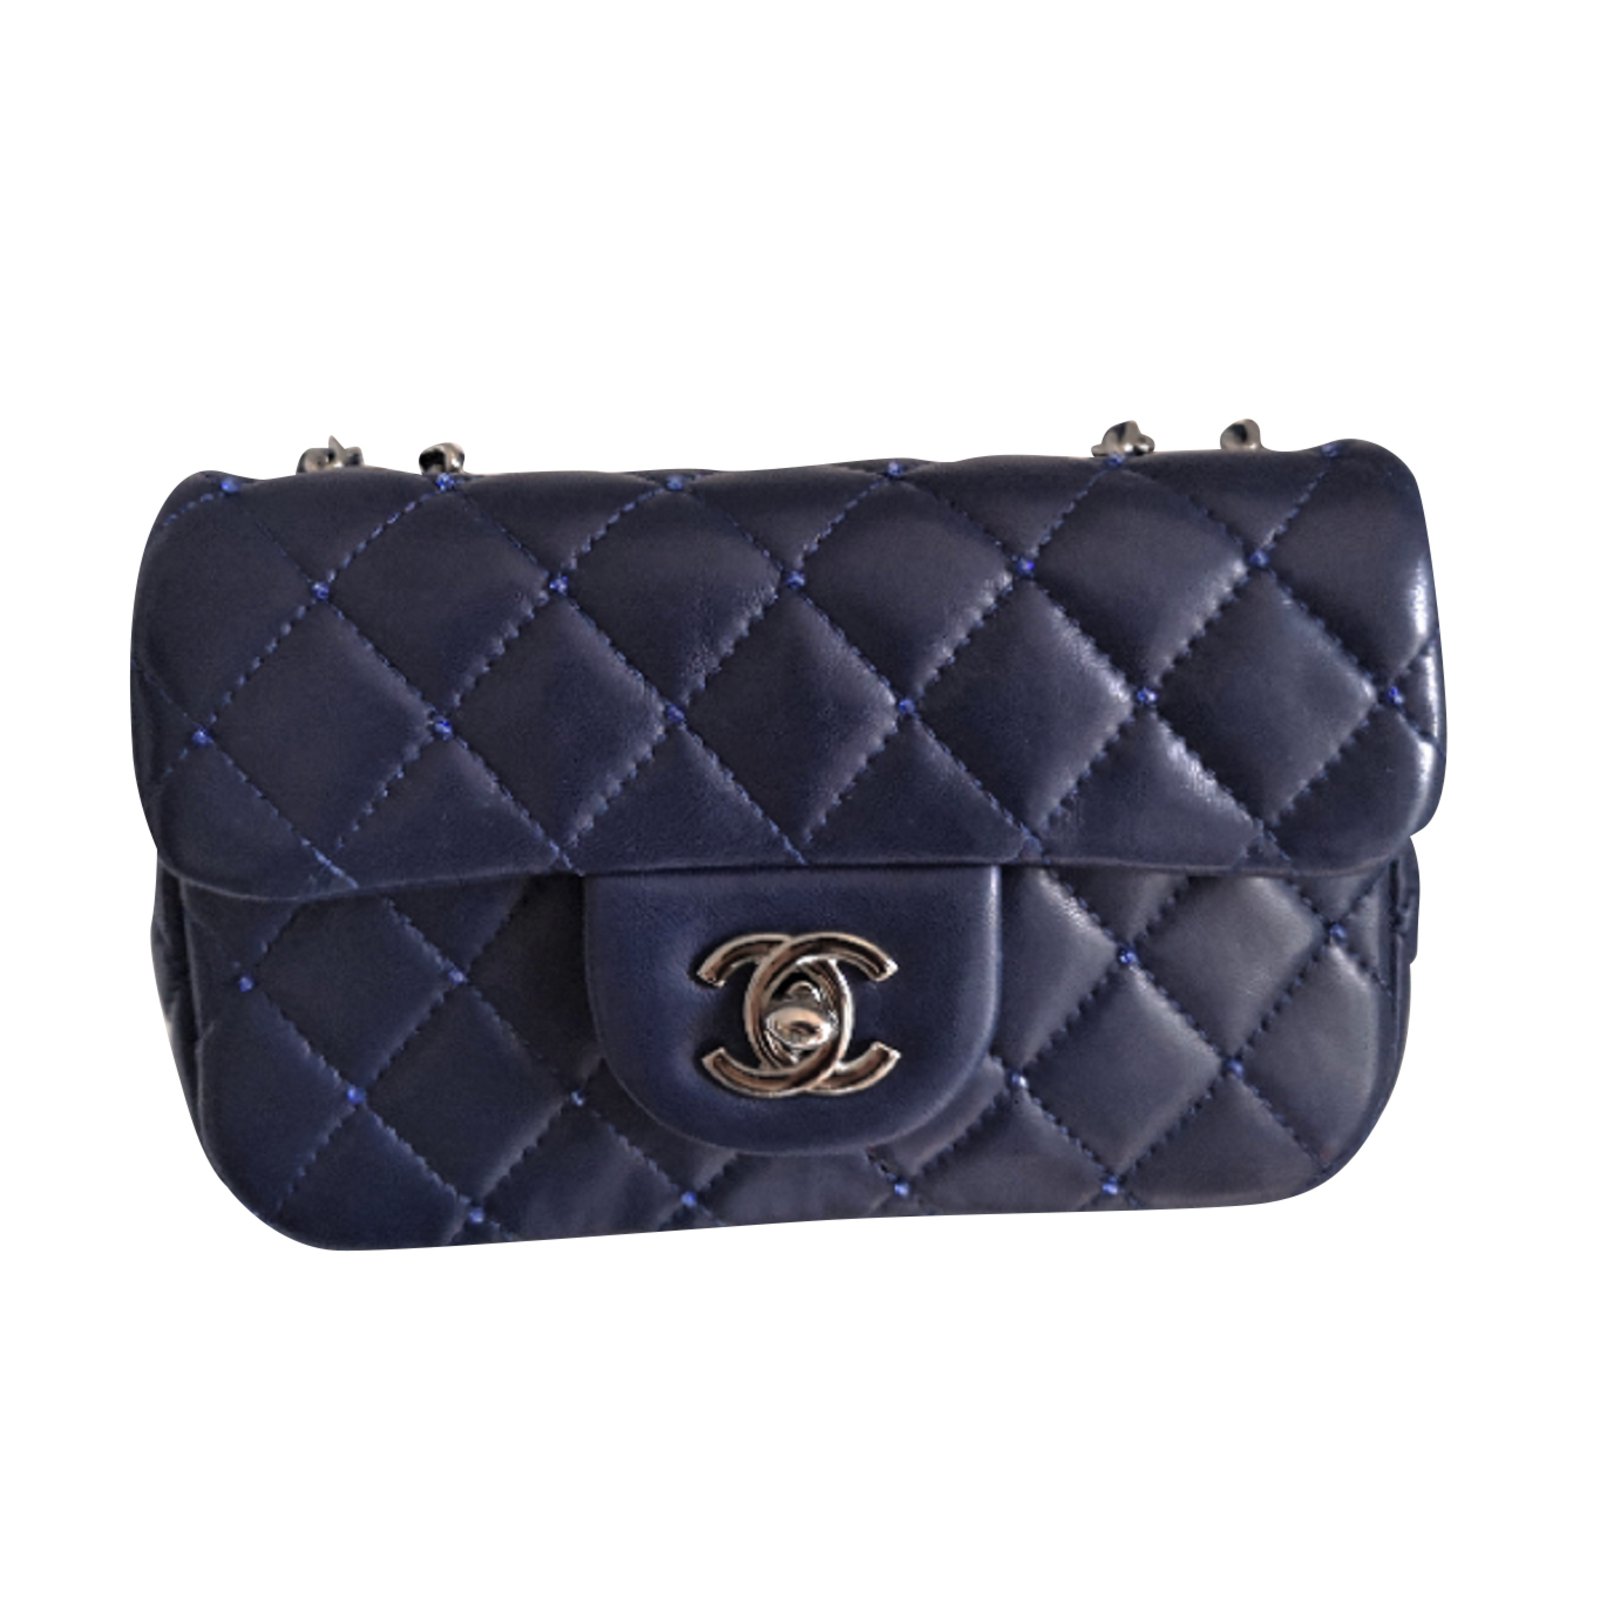 Limited edition Chanel Navy blue mini flap bag with swarovski